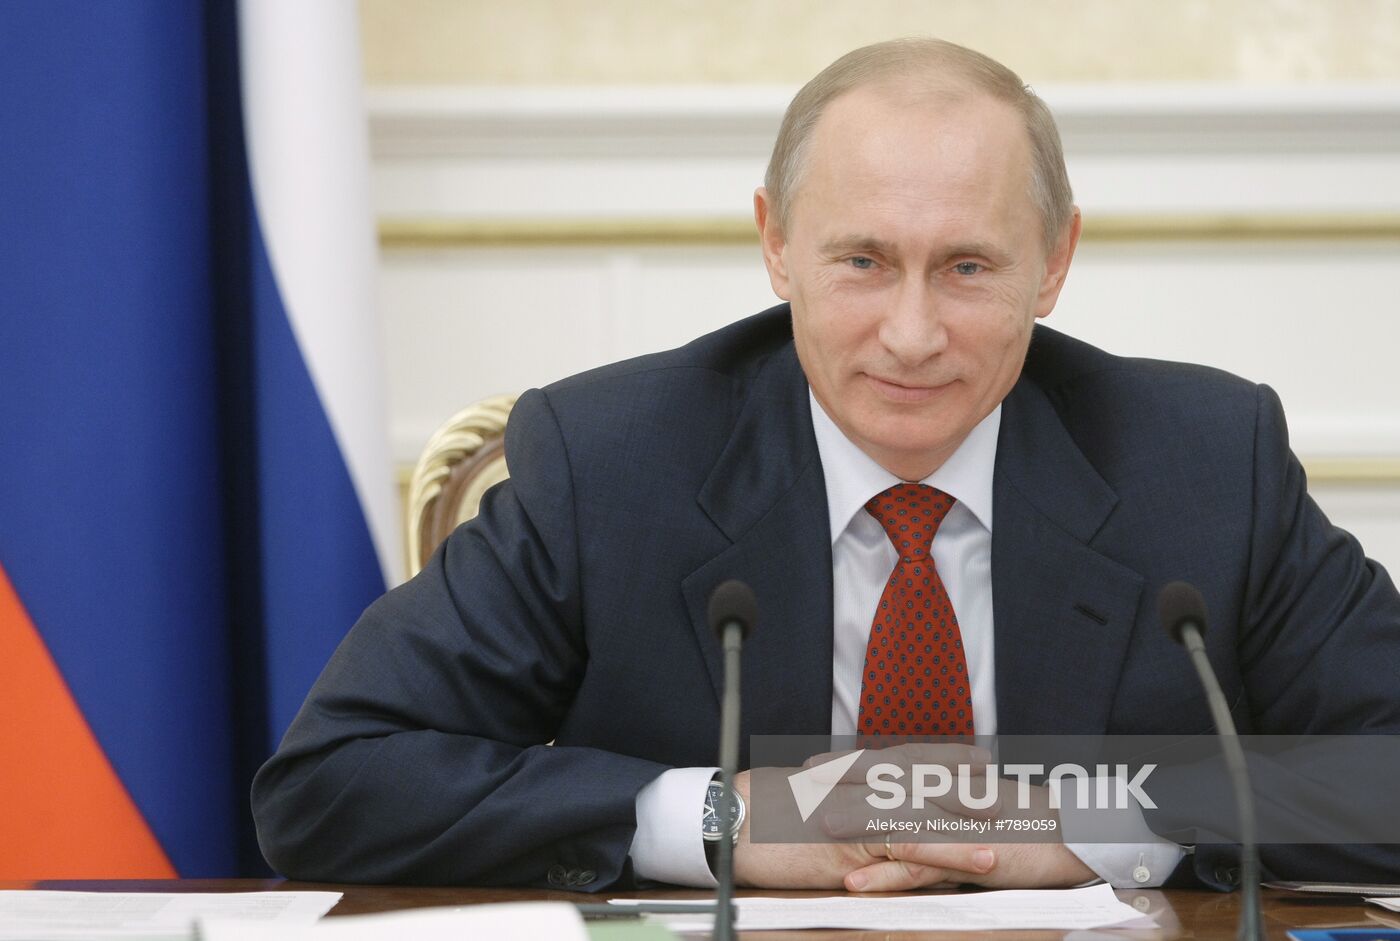 Vladimir Putin conducts Inner Cabinet meeting